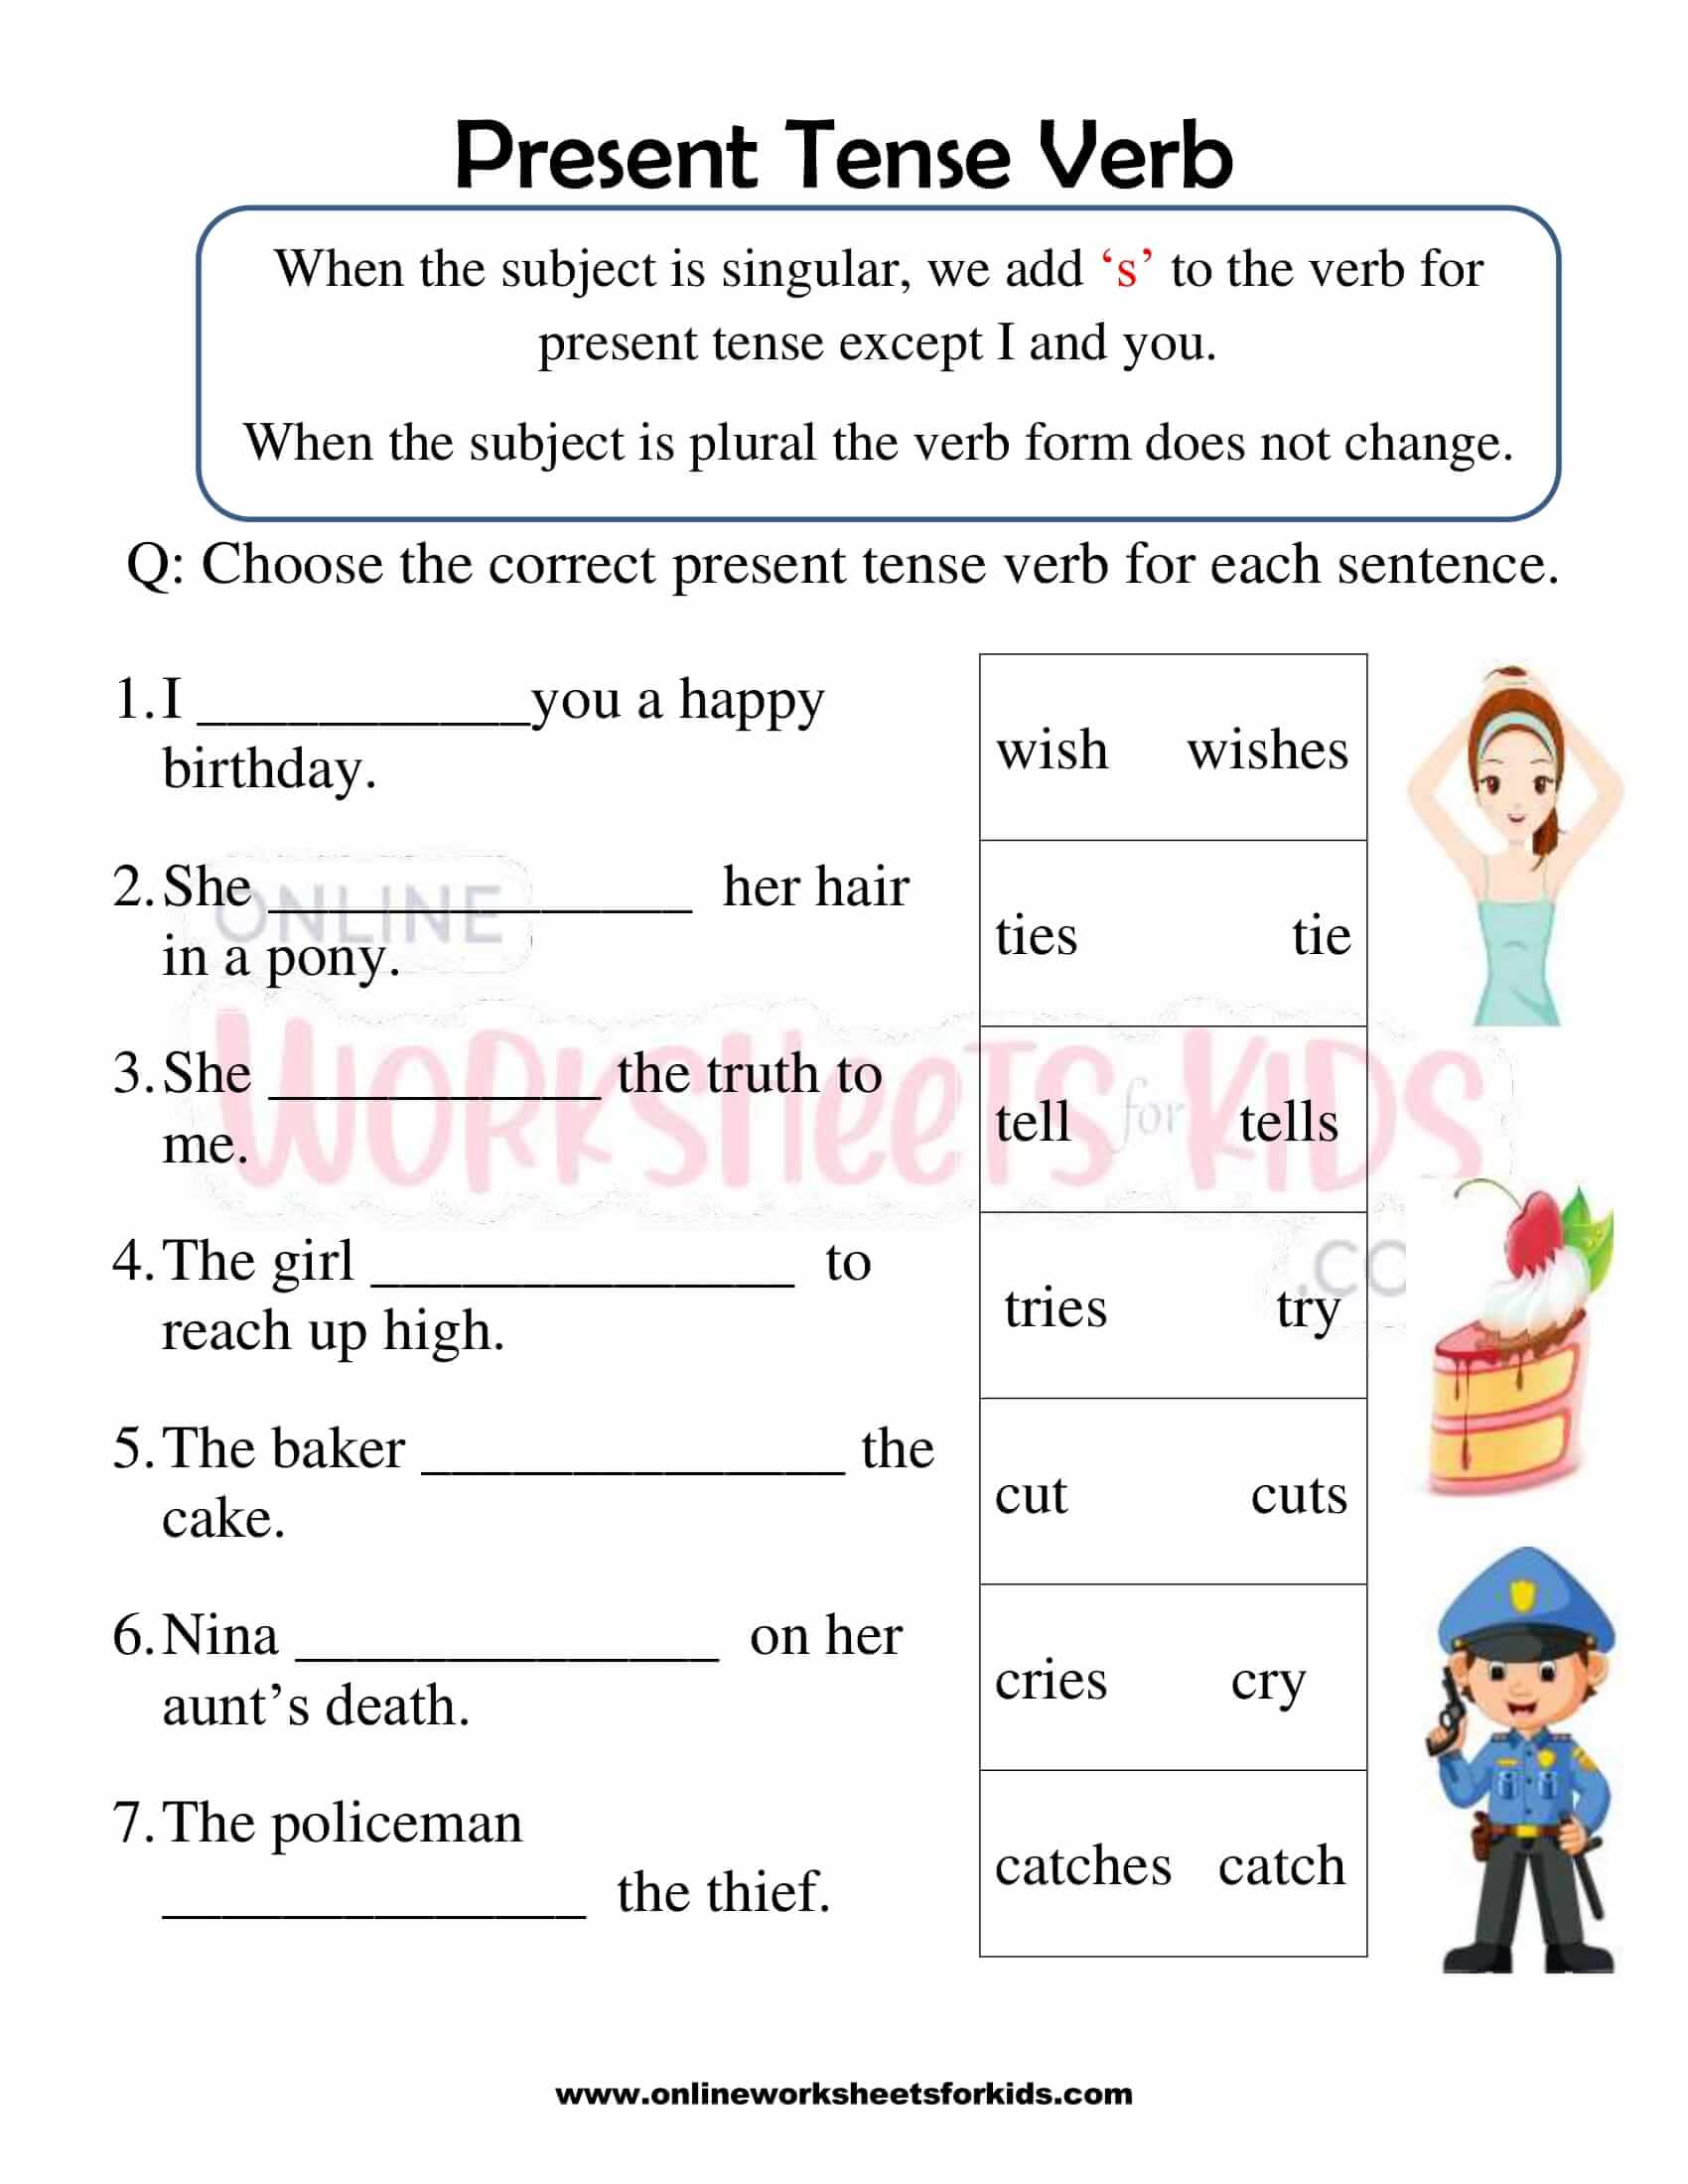 verb-tense-worksheets-correcting-verb-tenses-worksheets-k5-learning